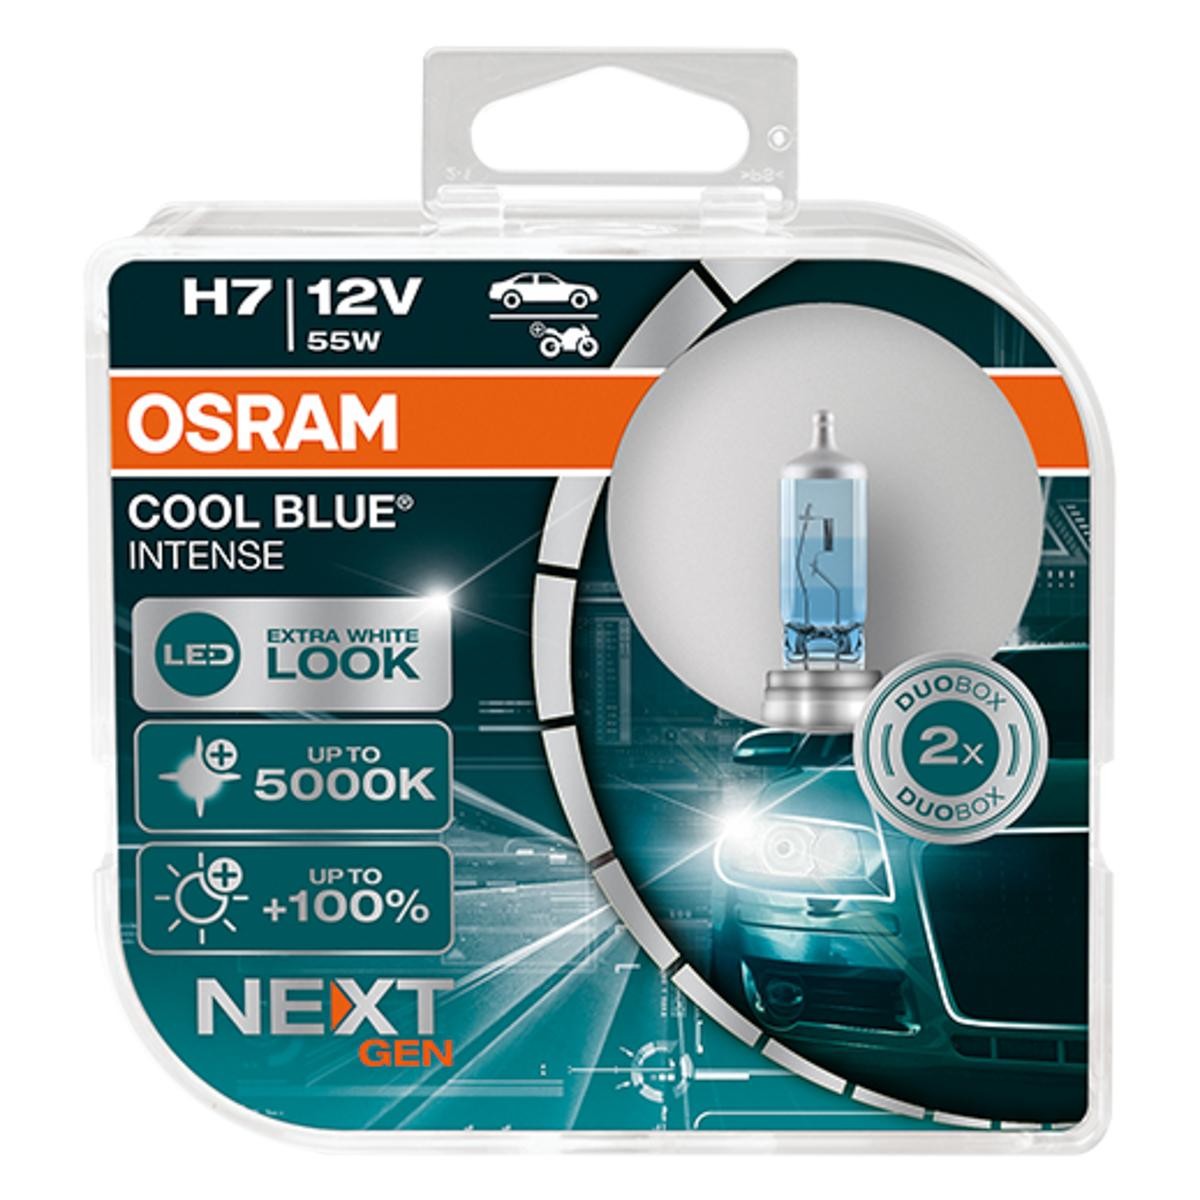 64210CBN-HCB OSRAM Headlight bulbs SEAT H7 12V 55W PX26d, 5000K, Halogen